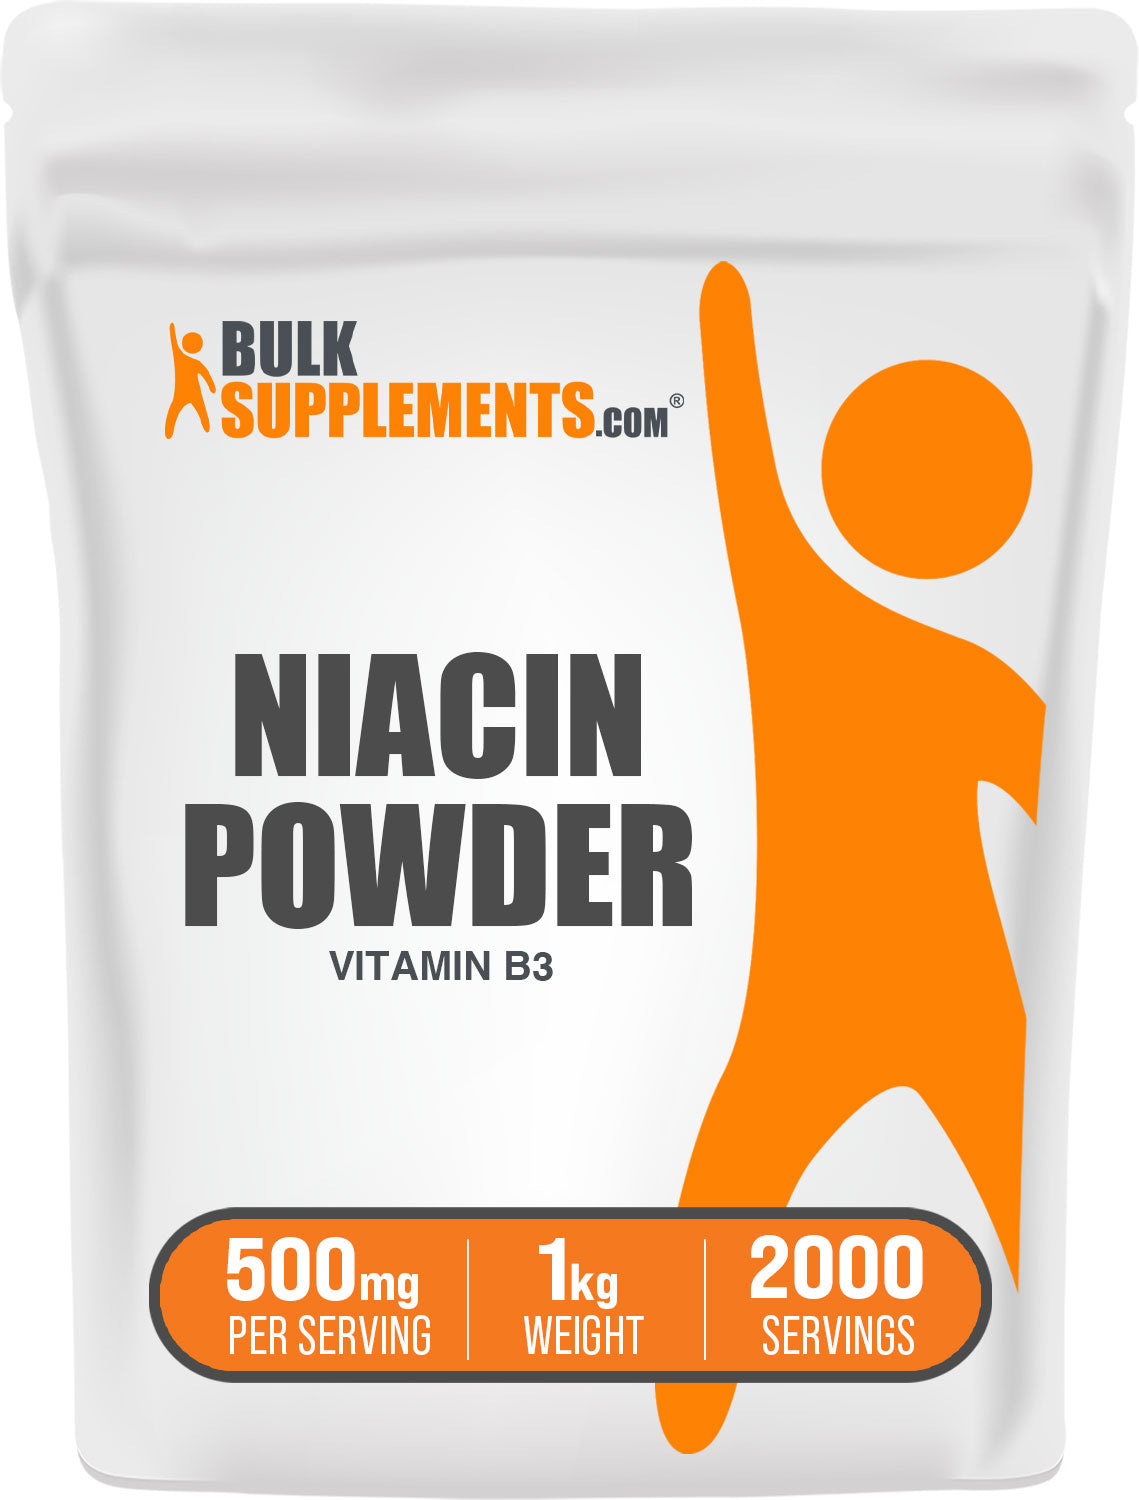 BulkSupplements Niacin Powder Vitamin B3 1kg bag